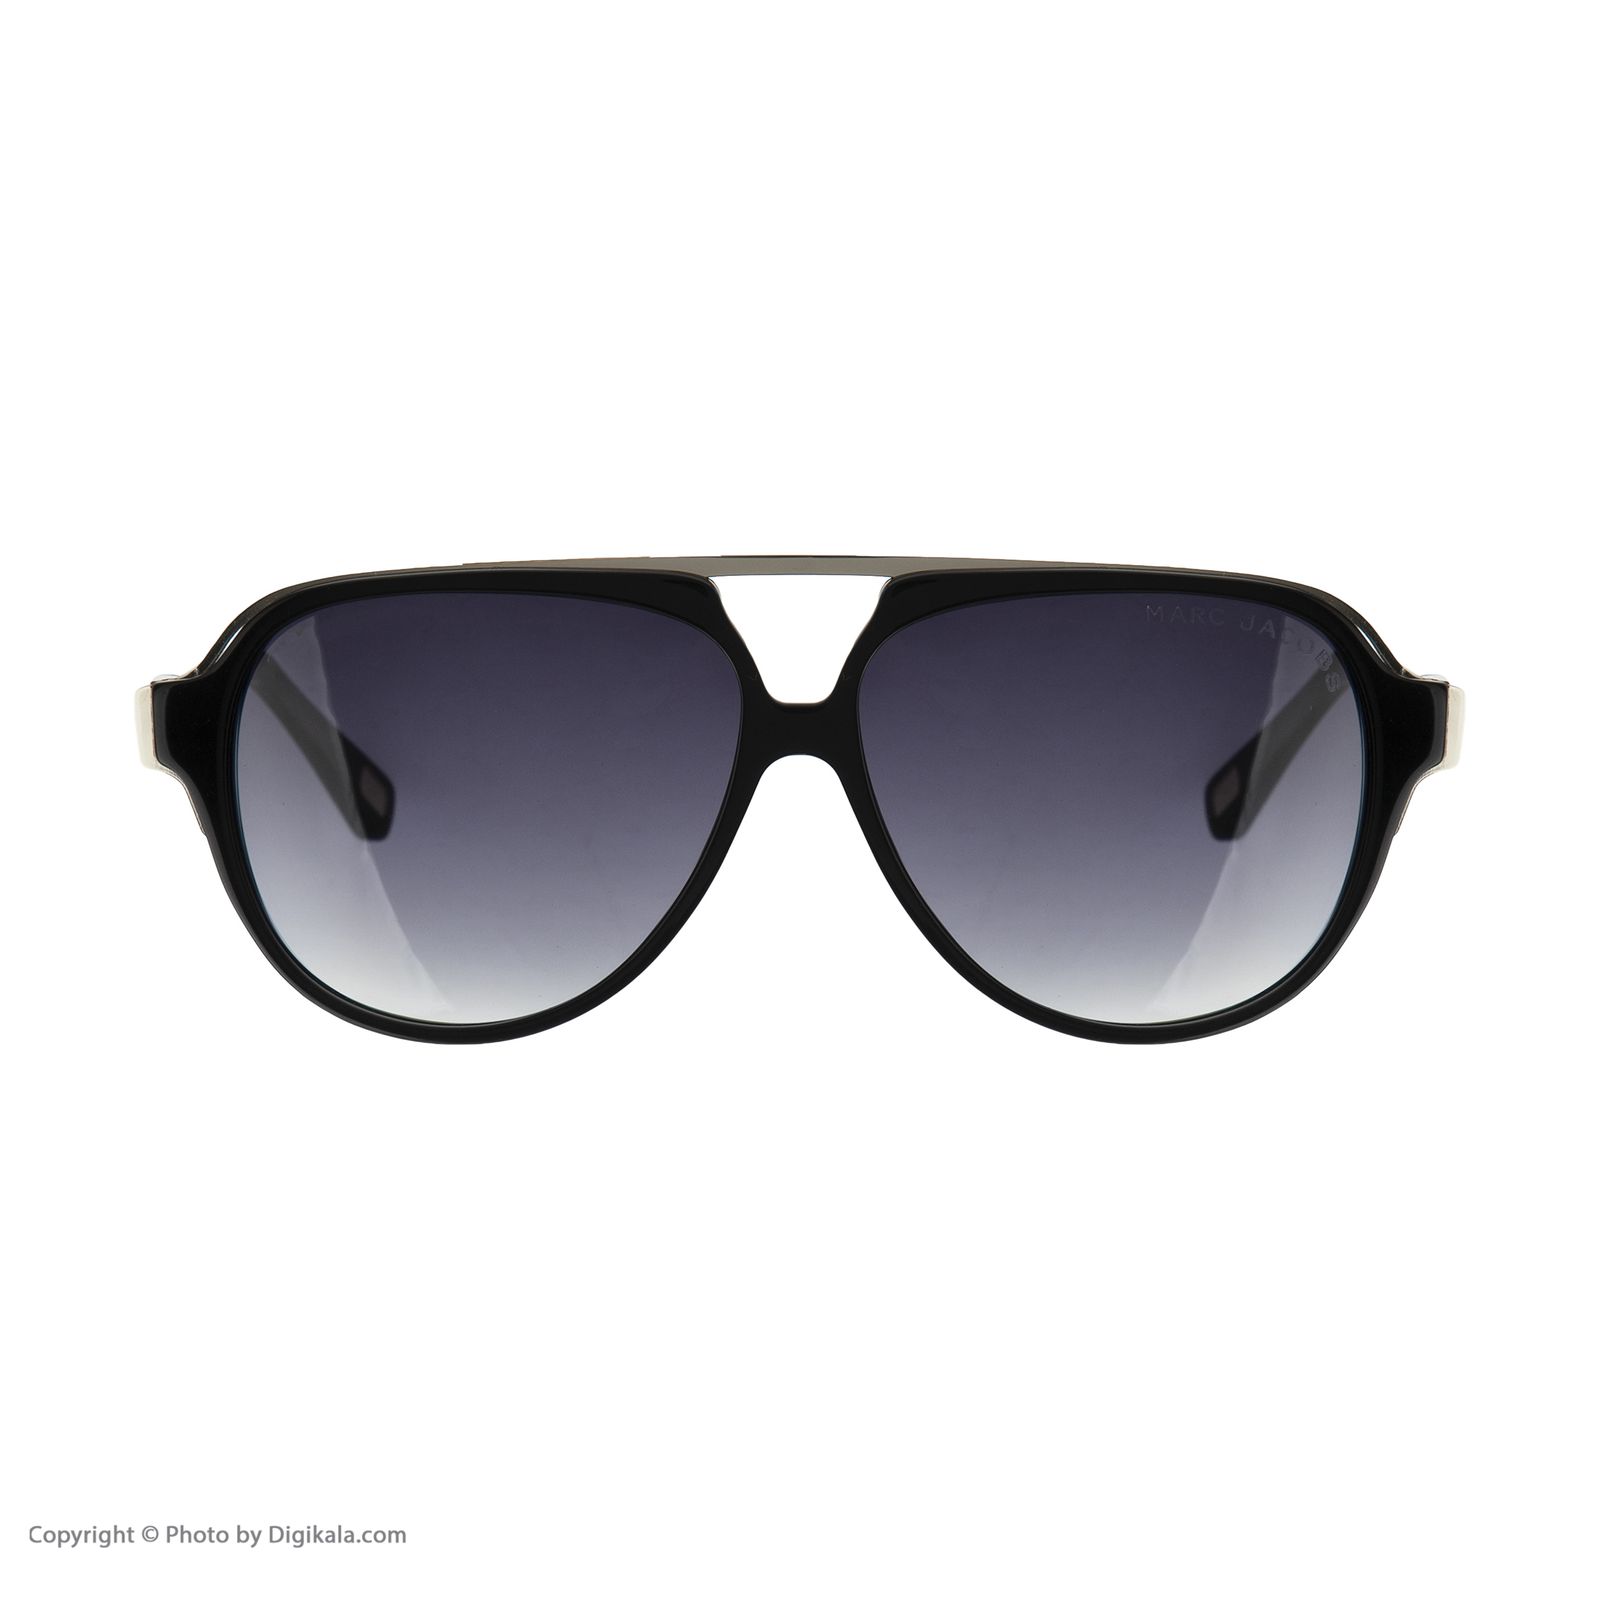  عینک آفتابی مارک جکوبس مدل 421  -  - 5